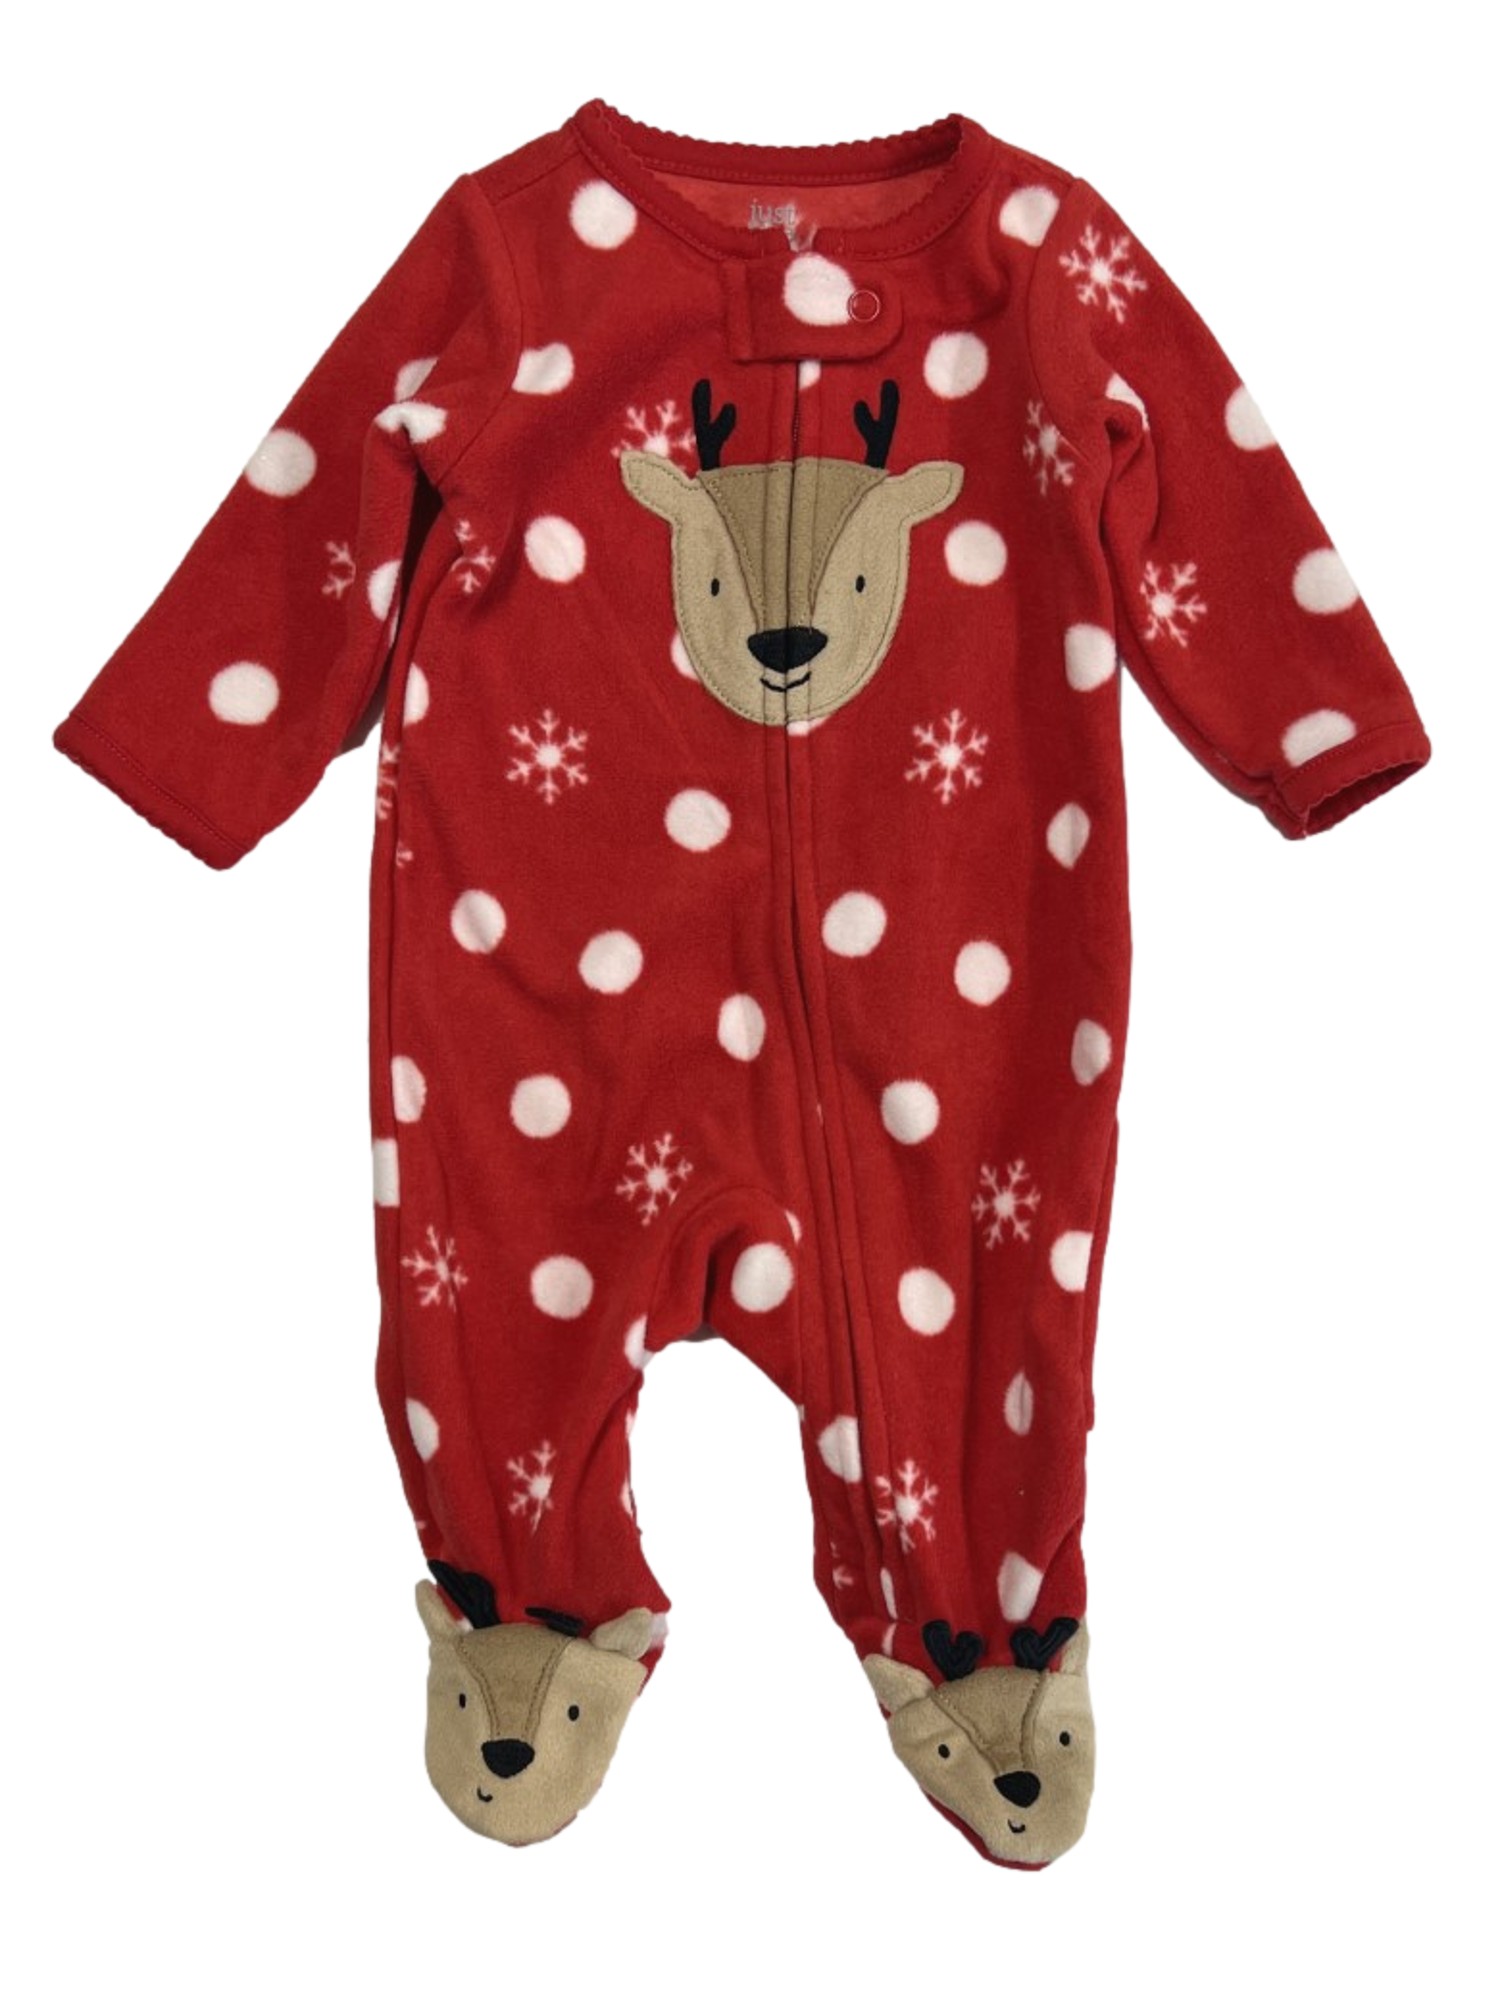 Carter's Carters Infant Girls Red Fleece Reindeer Snowflake Holiday Sleeper Pajamas NB